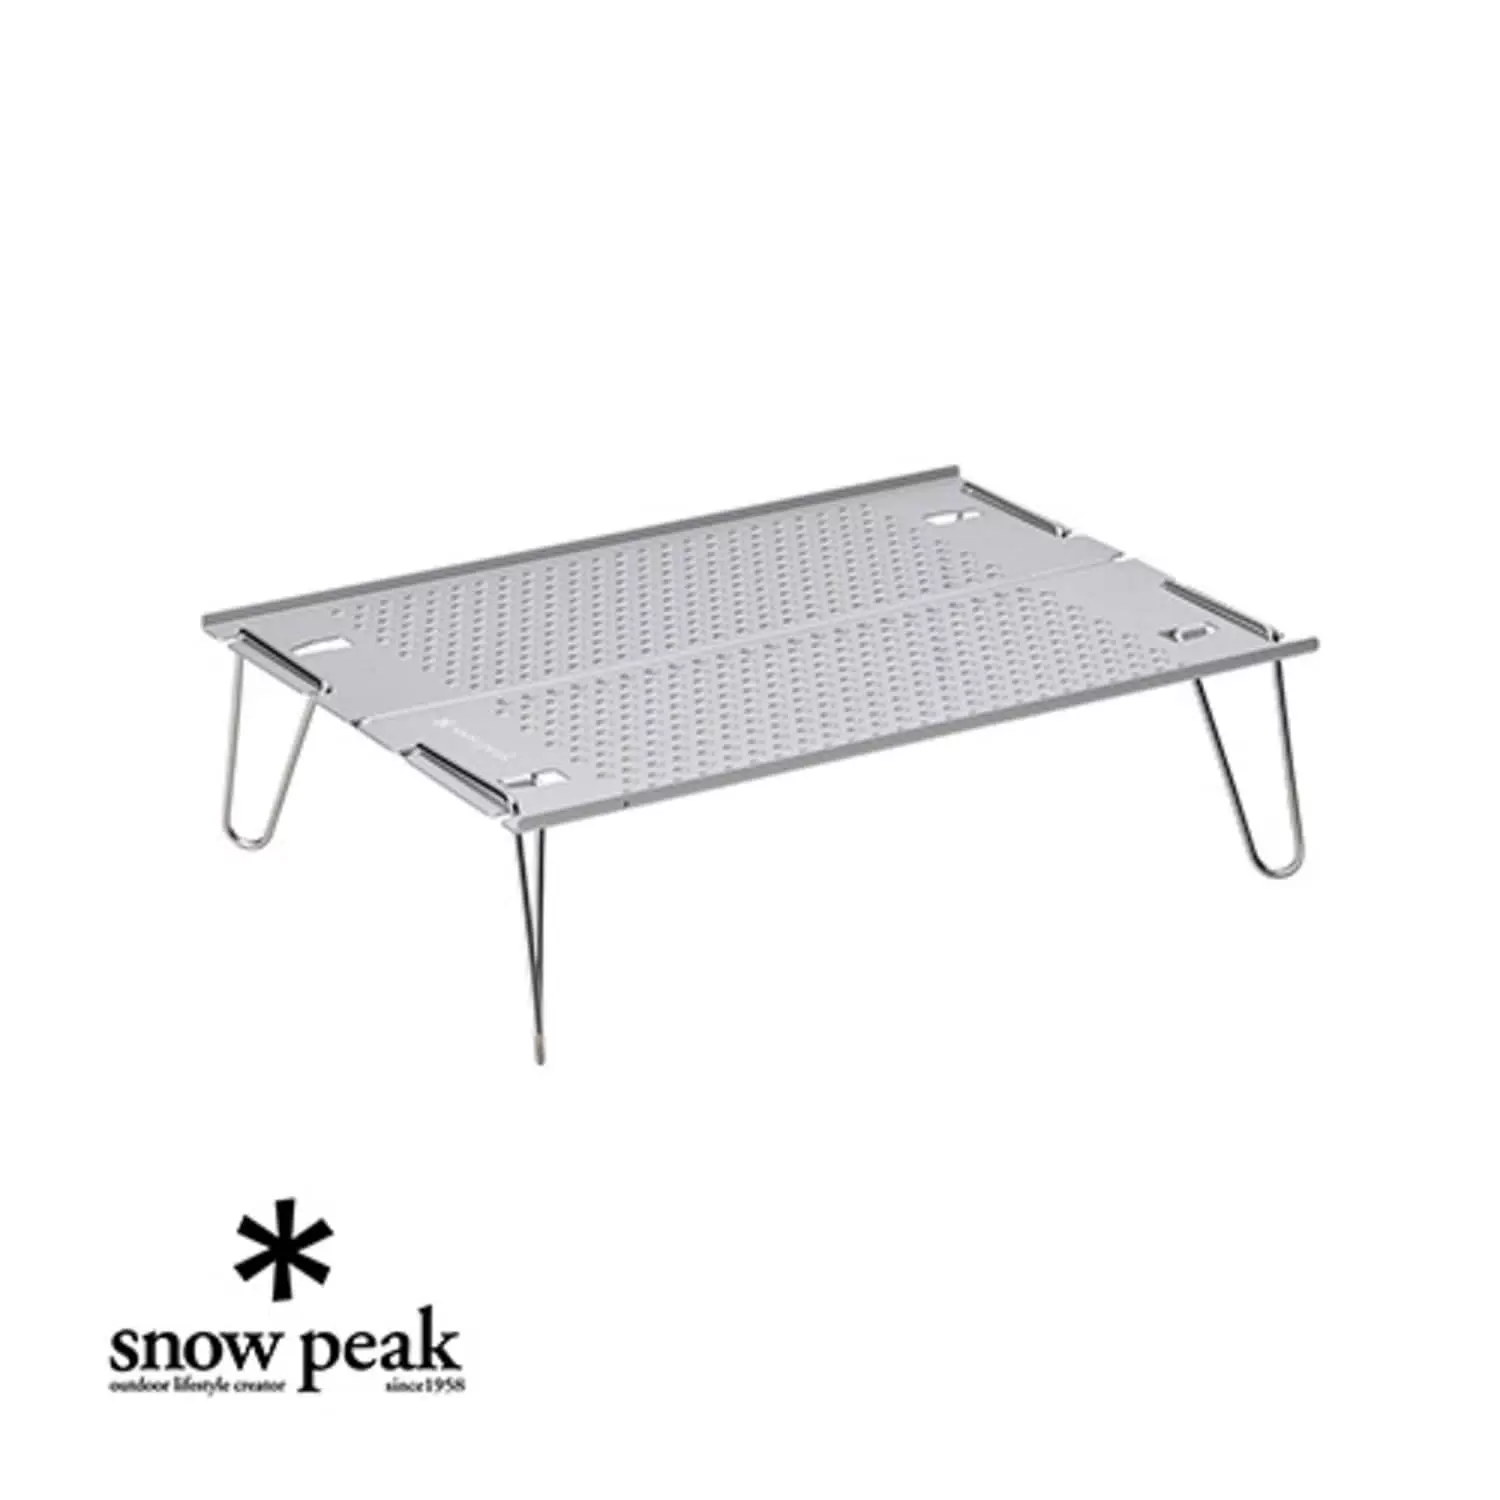 Snow Peak Ozen Table雪峰户外超轻折叠微型野餐桌操作台SLV-171-Taobao